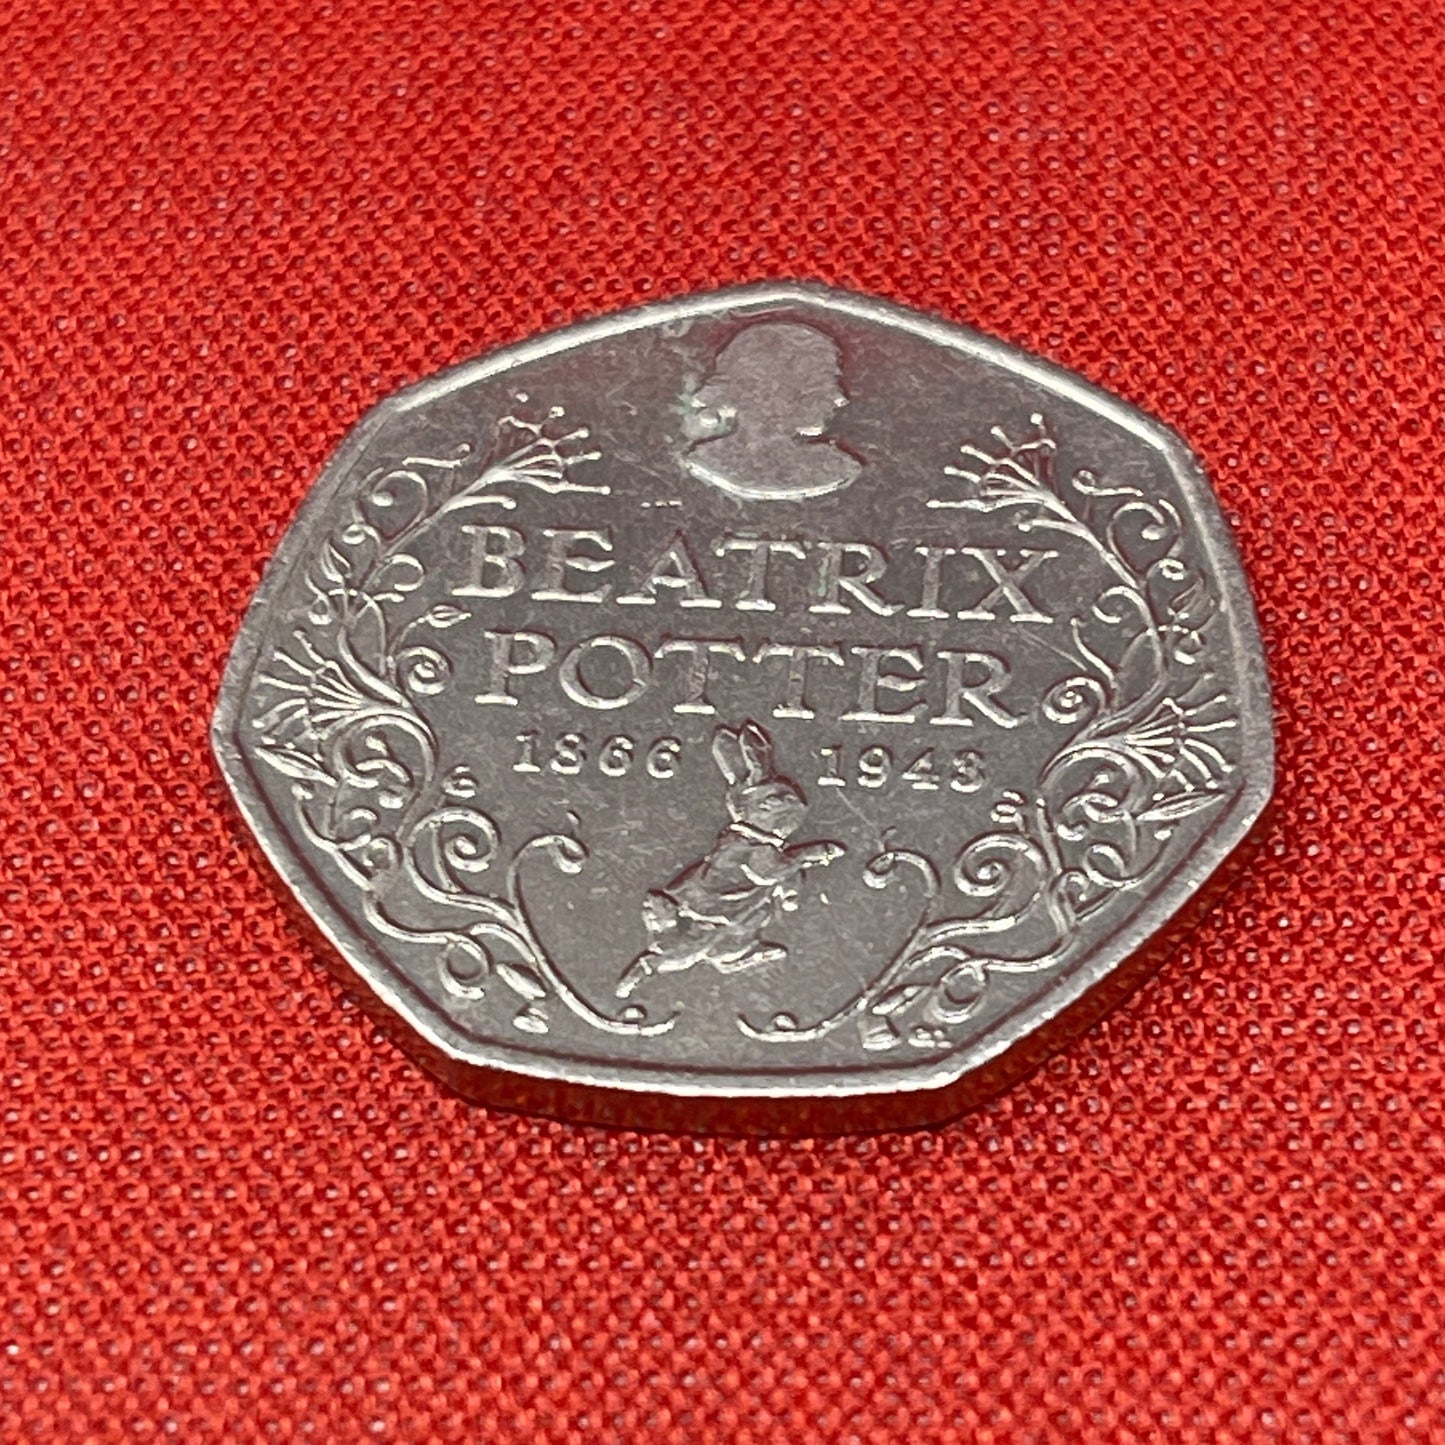 2016 Beatrix Potter 50p Coin Circulated